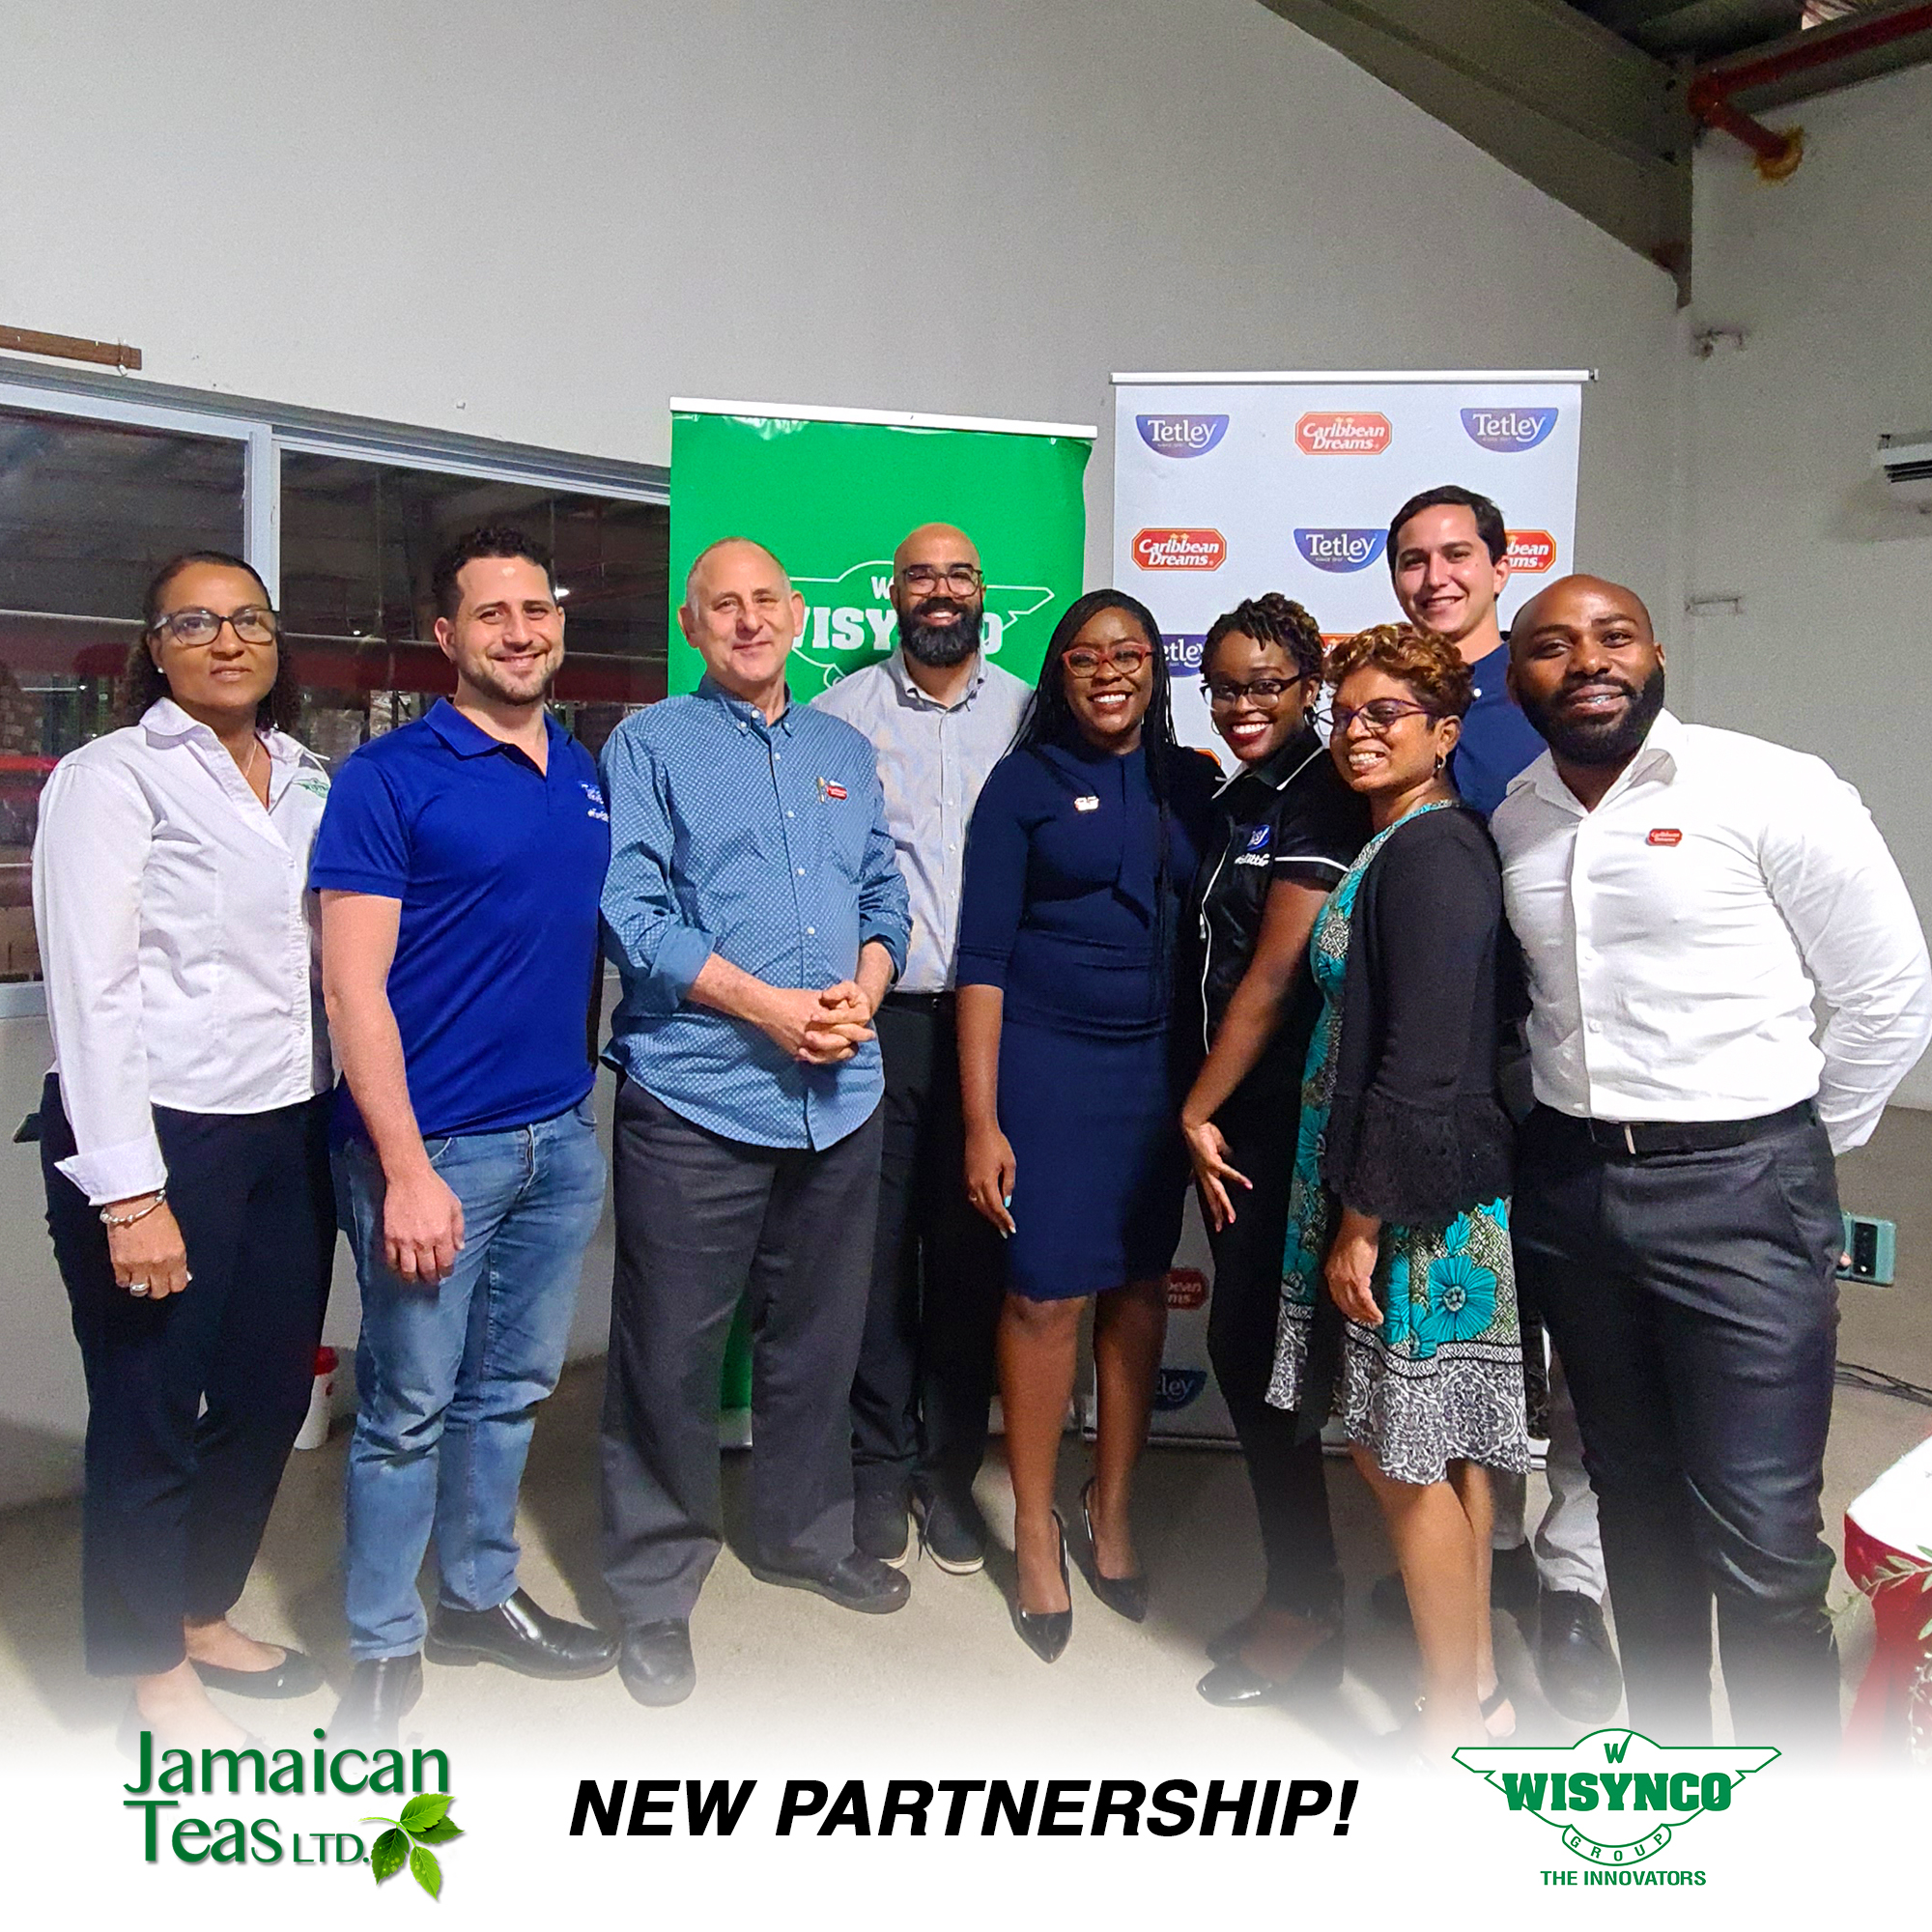 Jamaican Teas Ltd. and Wisynco New Partnership